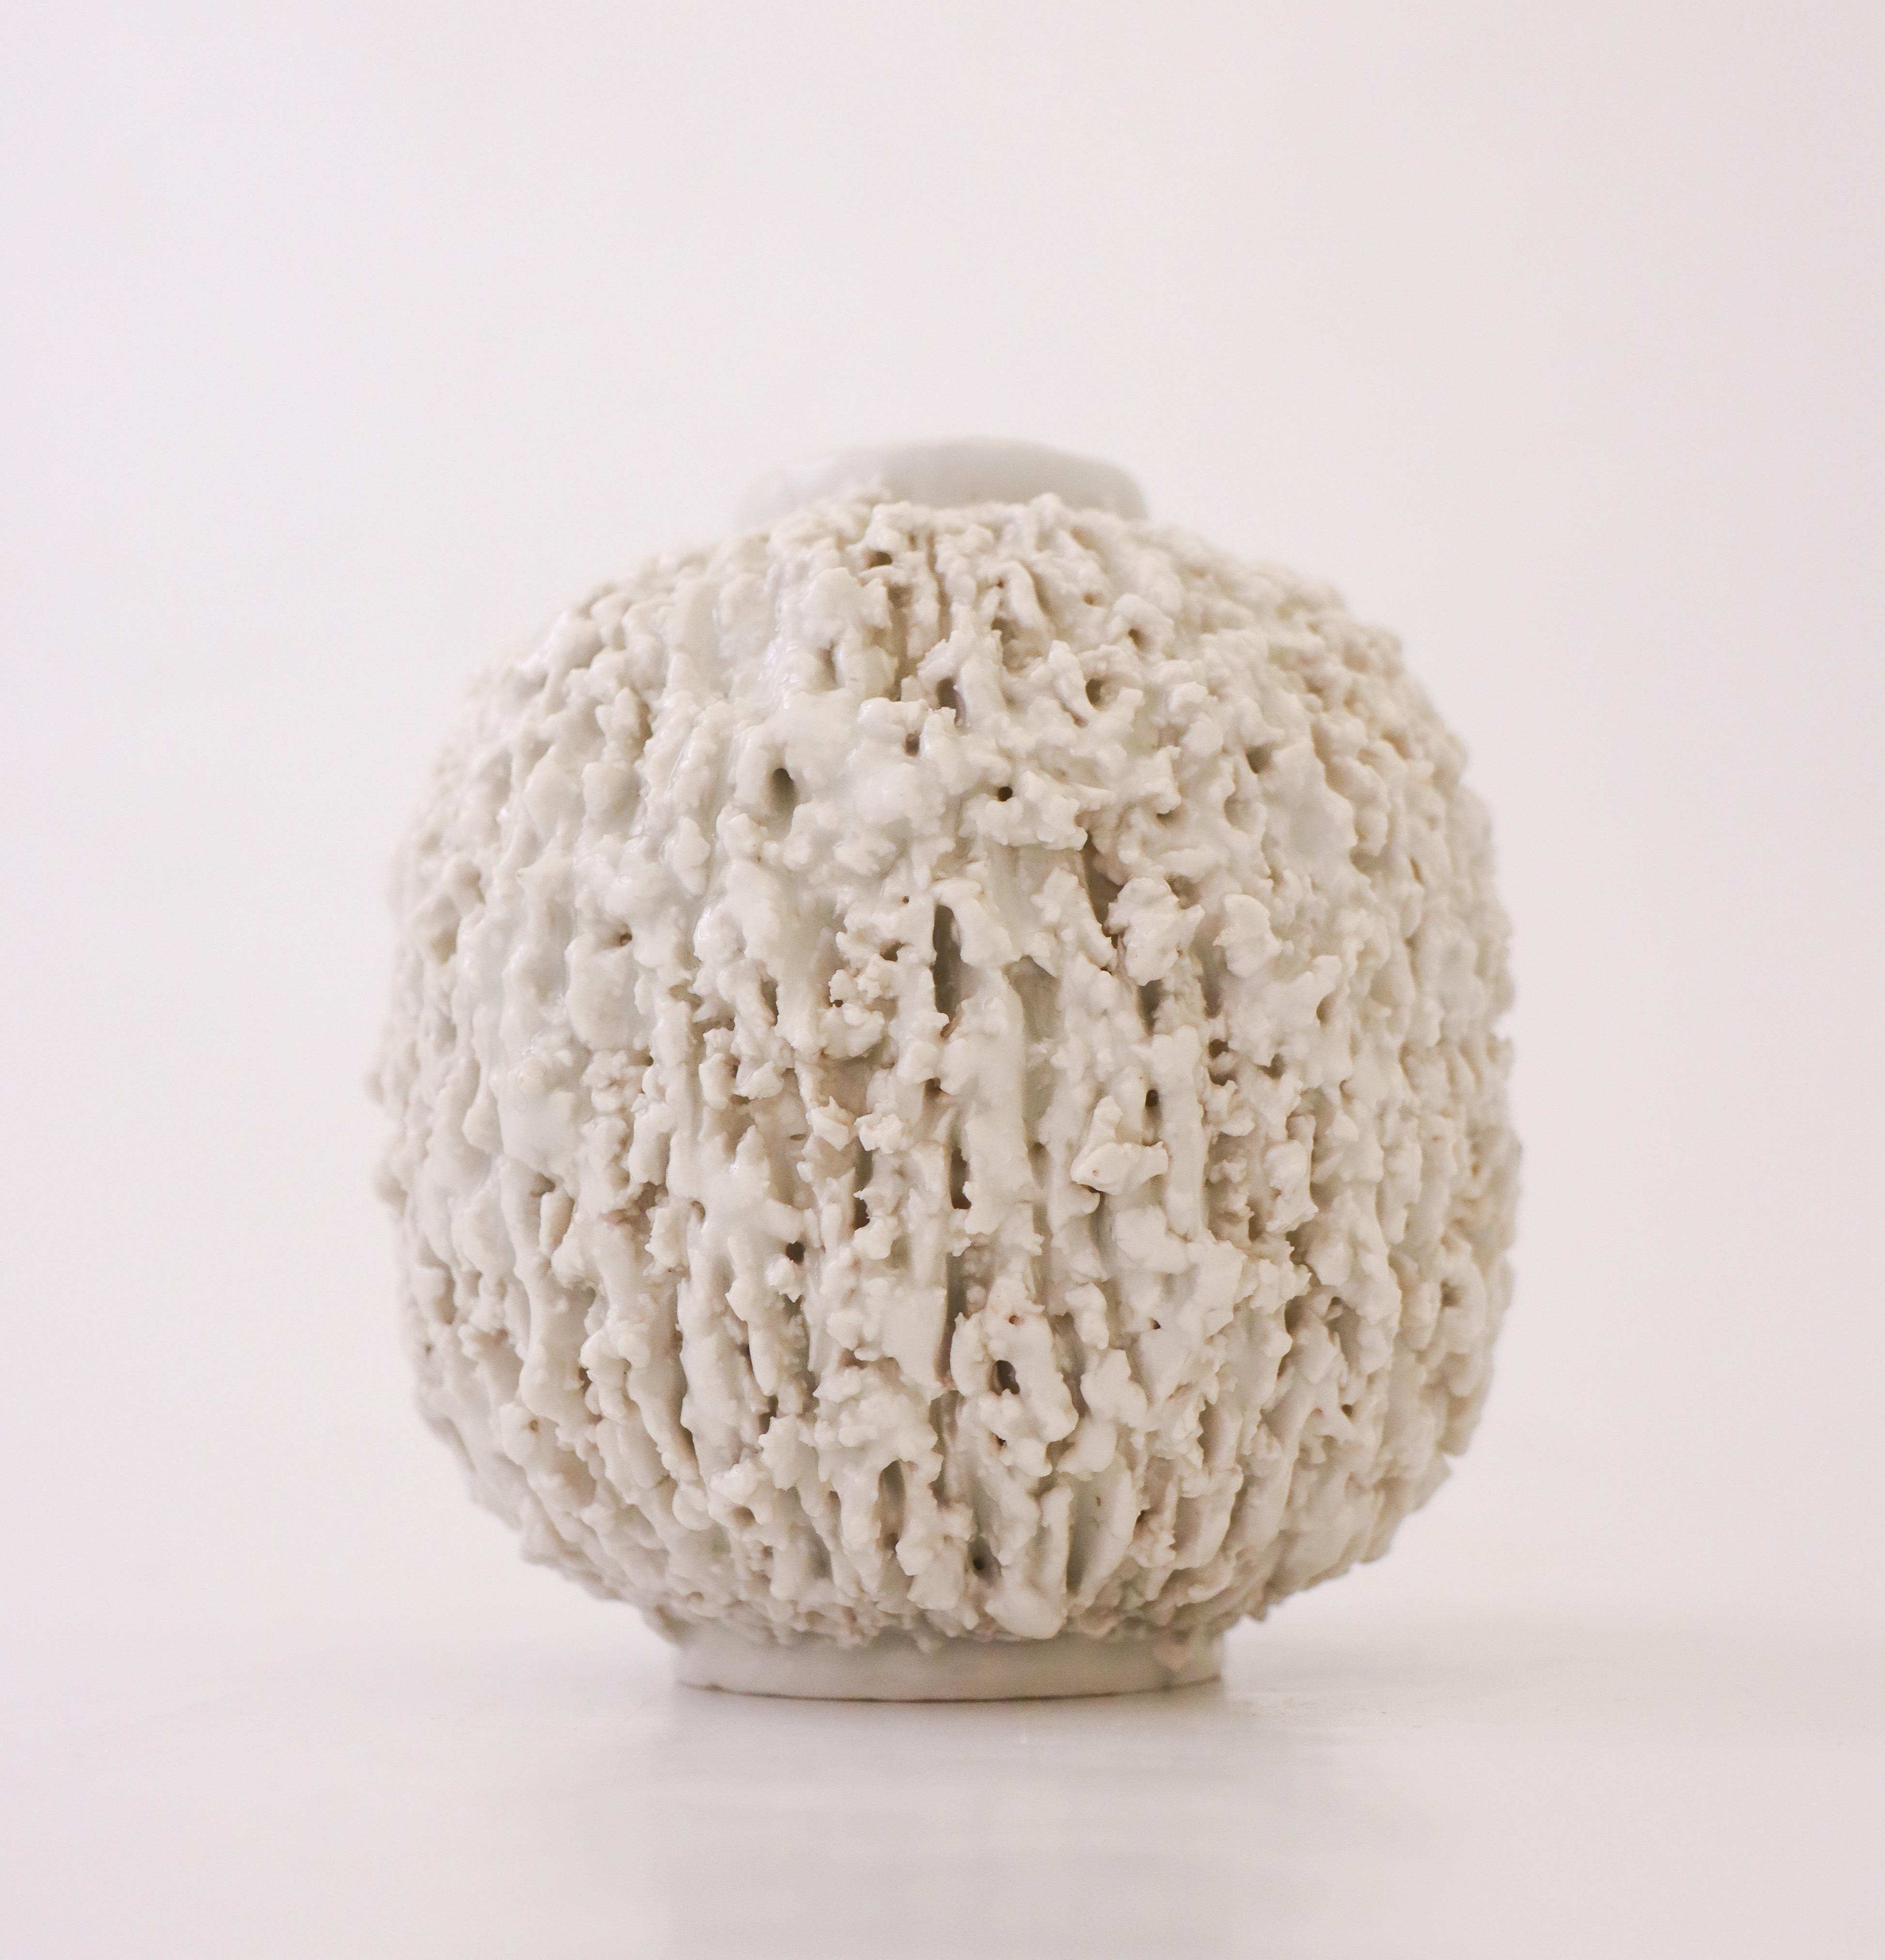 A white Hedgehog-vase designed by Gunnar Nylund at Rörstrand. It is 11 cm (4.4